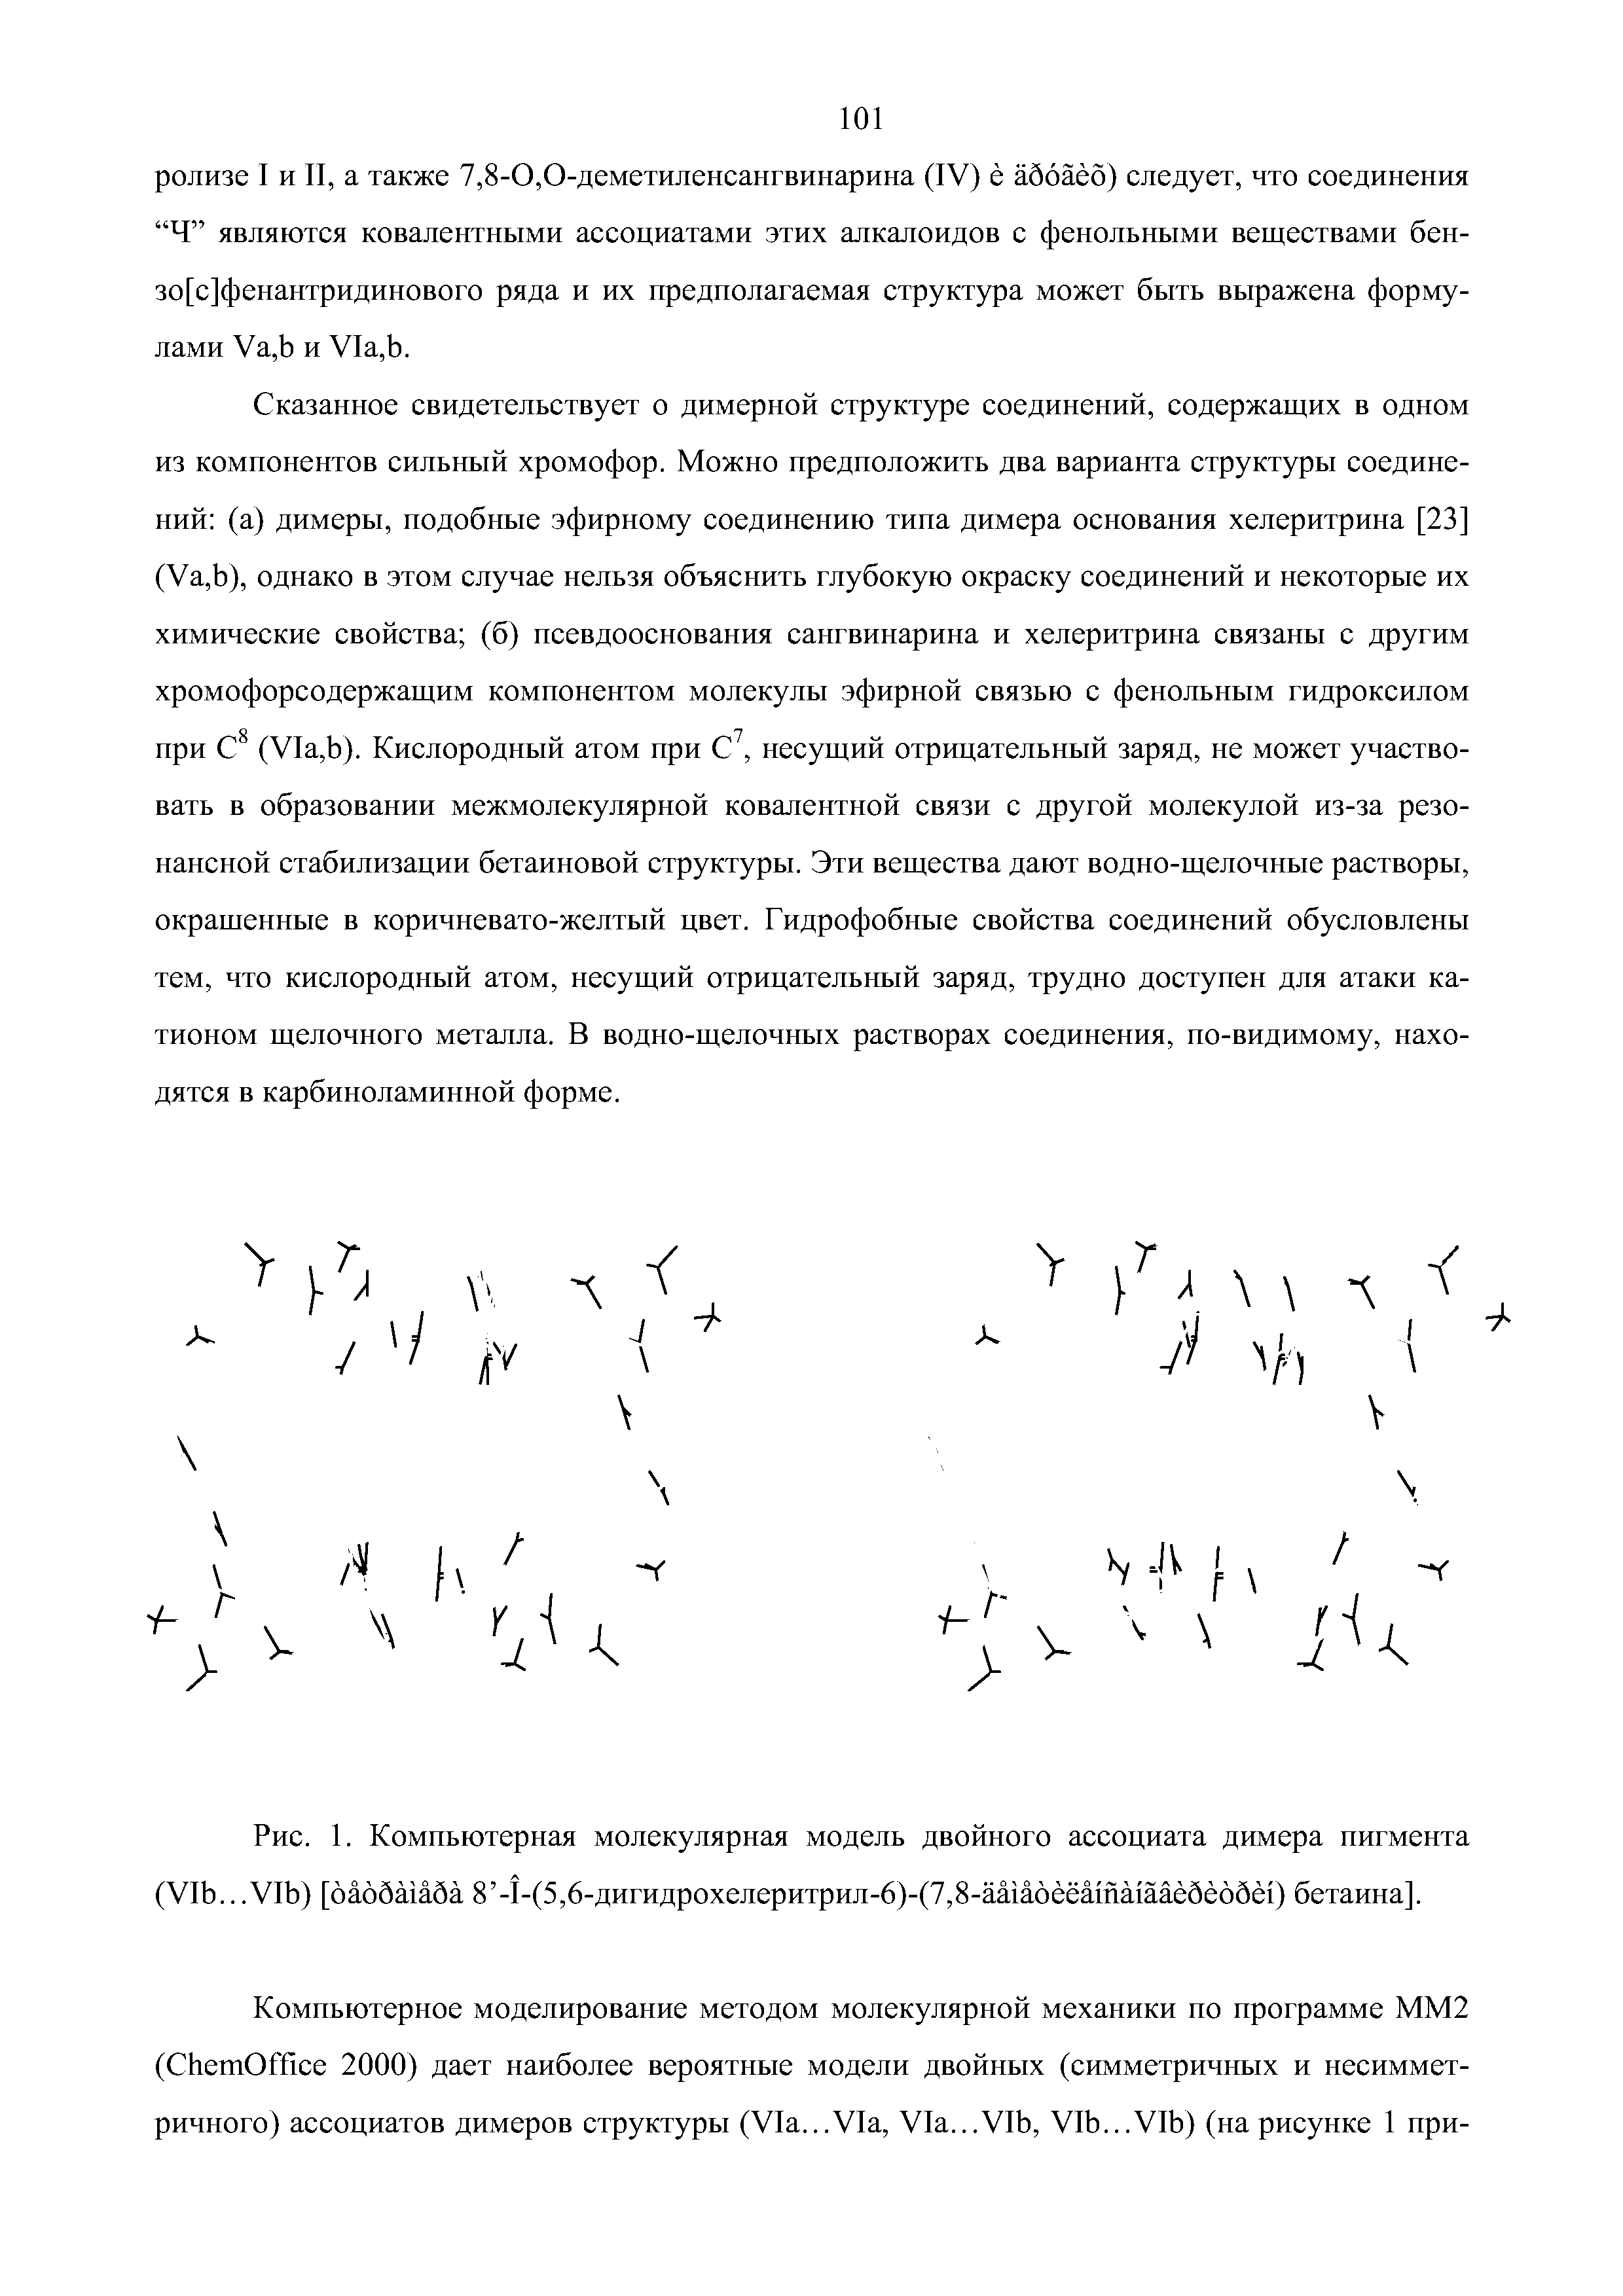 Рис. 1. Компьютерная молекулярная модель двойного ассоциата димера пигмента (VI ...VI ) [оаббшаба 8 -1-(5,6-дигидрохелеритрил-6)-(7,8-аа1аоёёата1ааёбёобё1) бетаина].